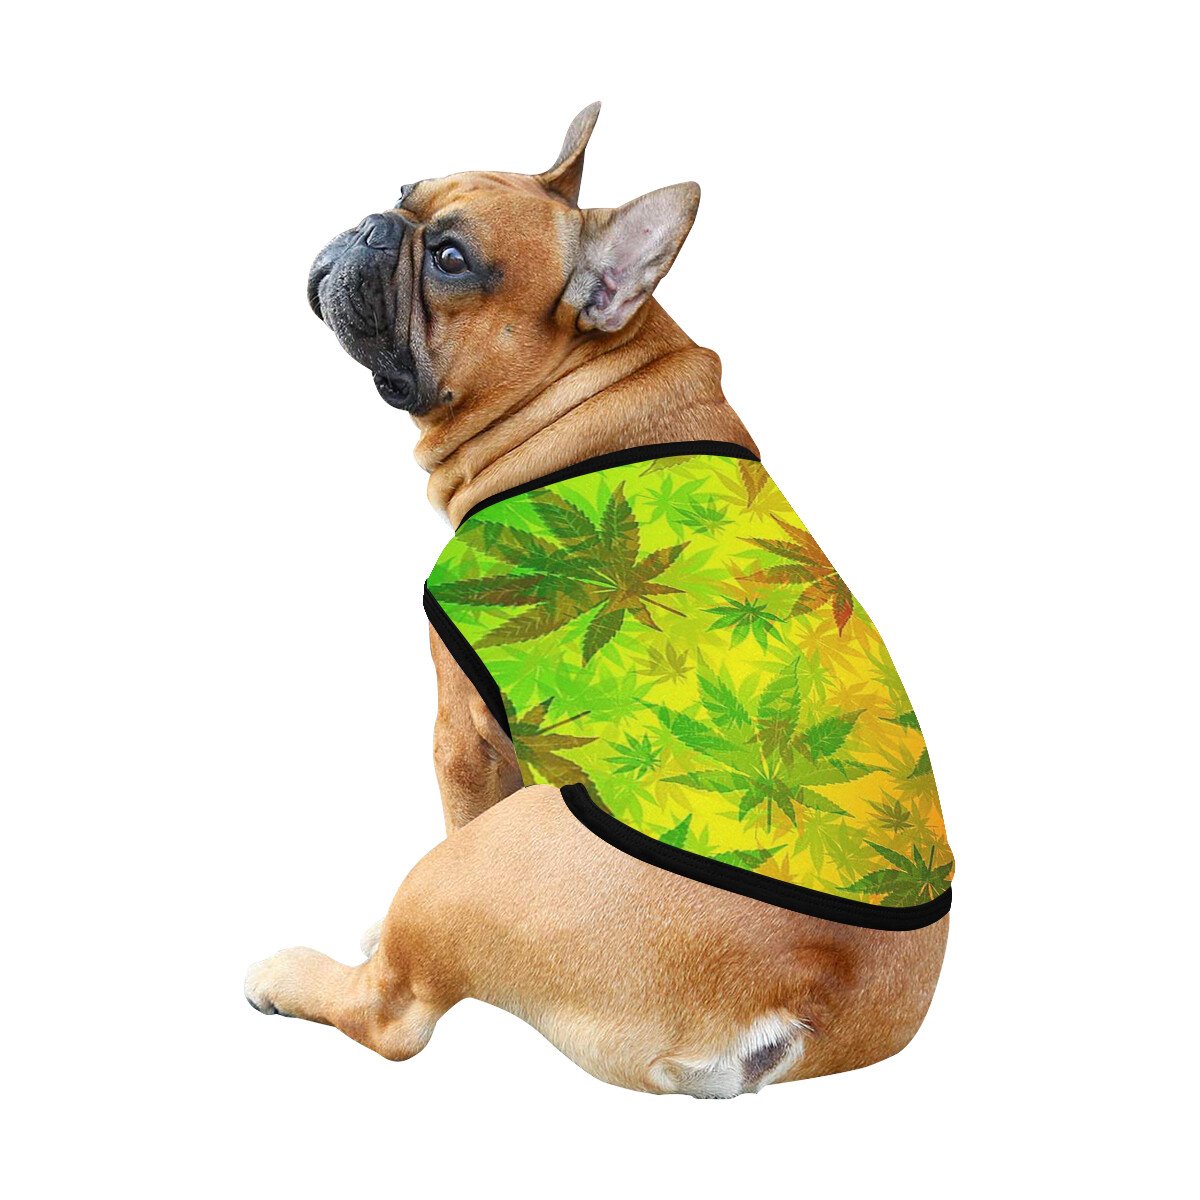 🐕 Dog t-shirt, dog shirt, dog clothes, dog tank top, dog gift, dog costume, 7 sizes XS to 3XL, gift, marijuana, cannabis, weed, leaves, rasta